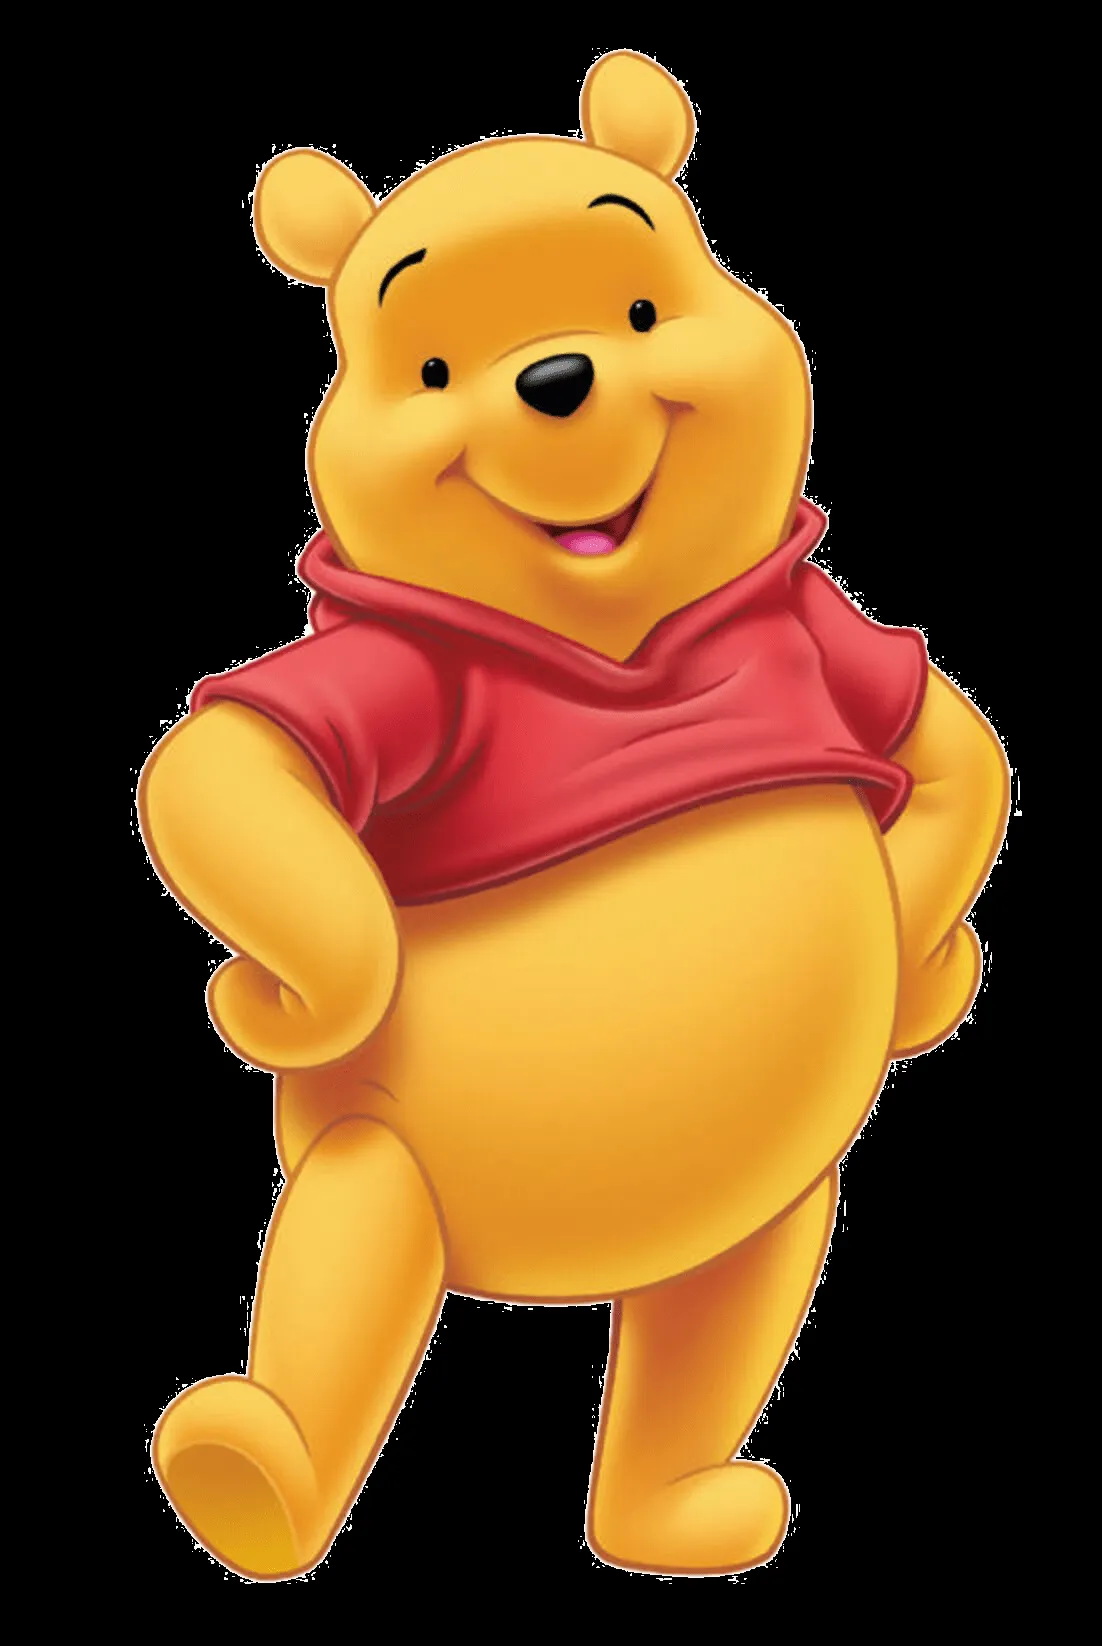 Image - Winnie The Pooh.png - DisneyWiki